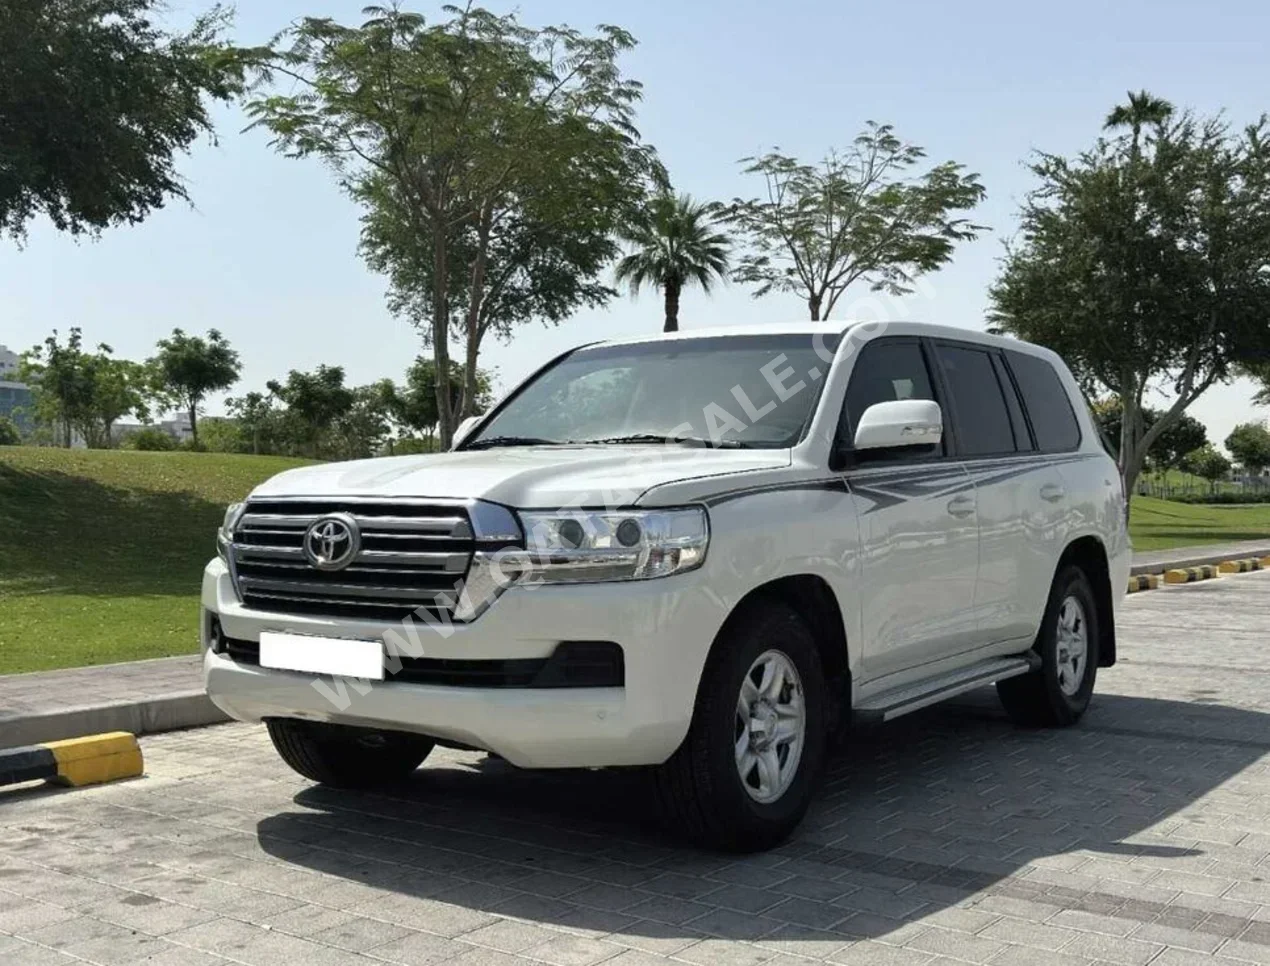 Toyota  Land Cruiser  GXR  2018  Automatic  99,750 Km  6 Cylinder  Four Wheel Drive (4WD)  SUV  White